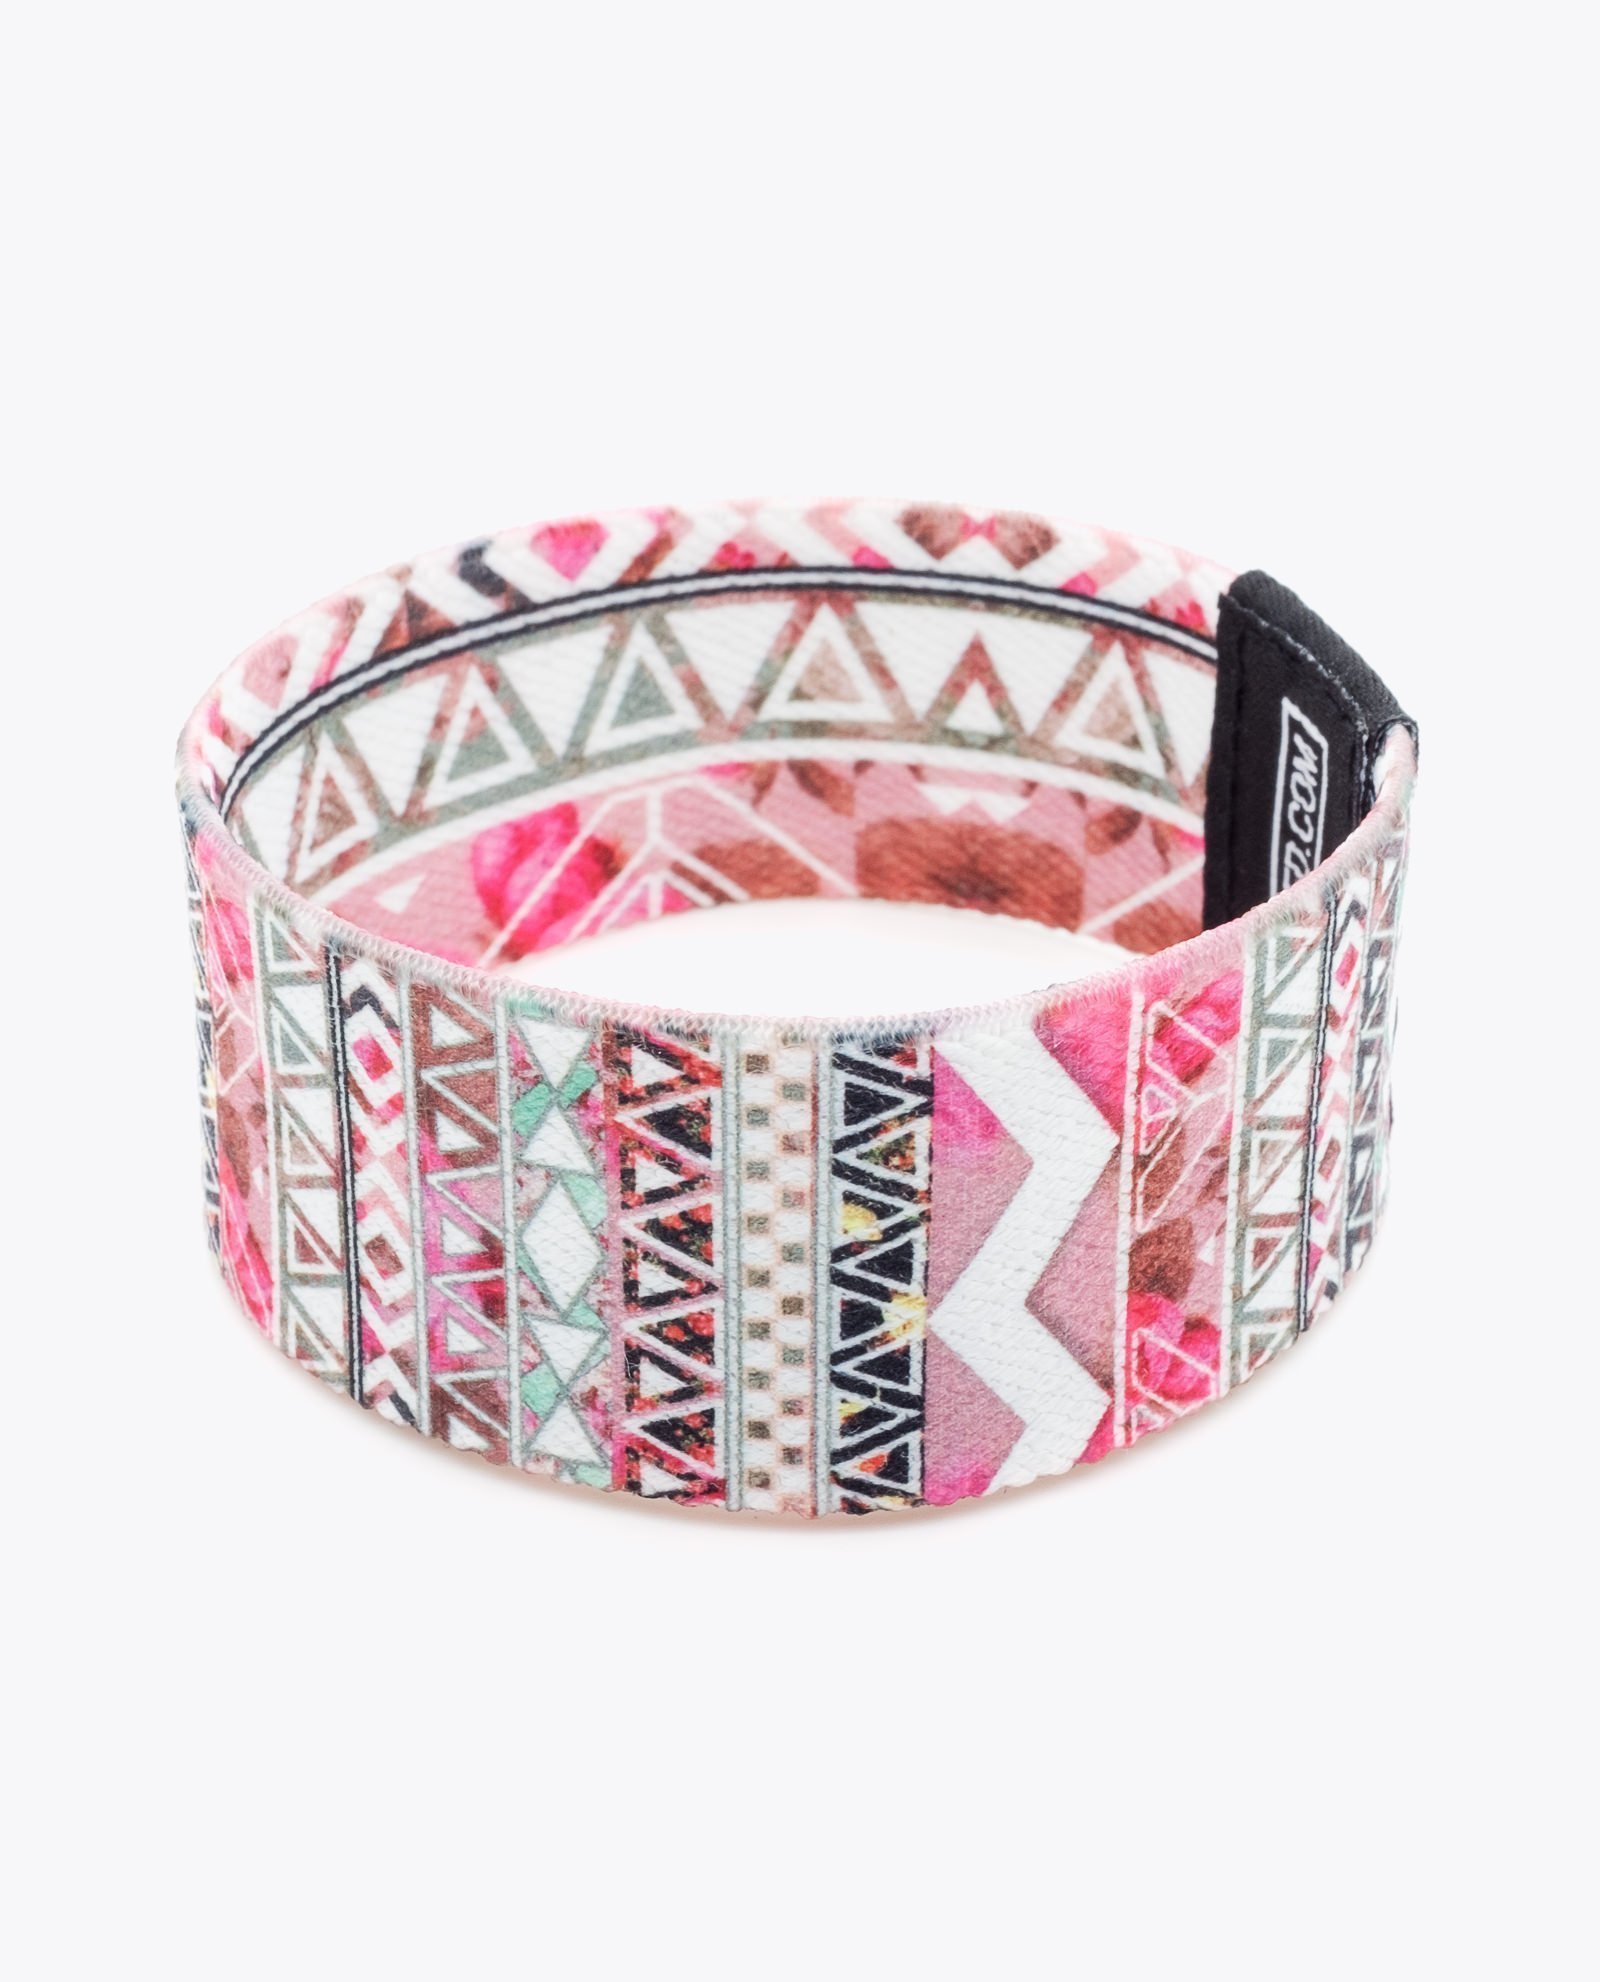 Buy Aztec Bracelets Anklet Bracelet Boho Ethnic Bohemian Tribal Festival  Jewelry Hippie Friendship Woven Gifts for Vegan Women Men Online in India -  Etsy